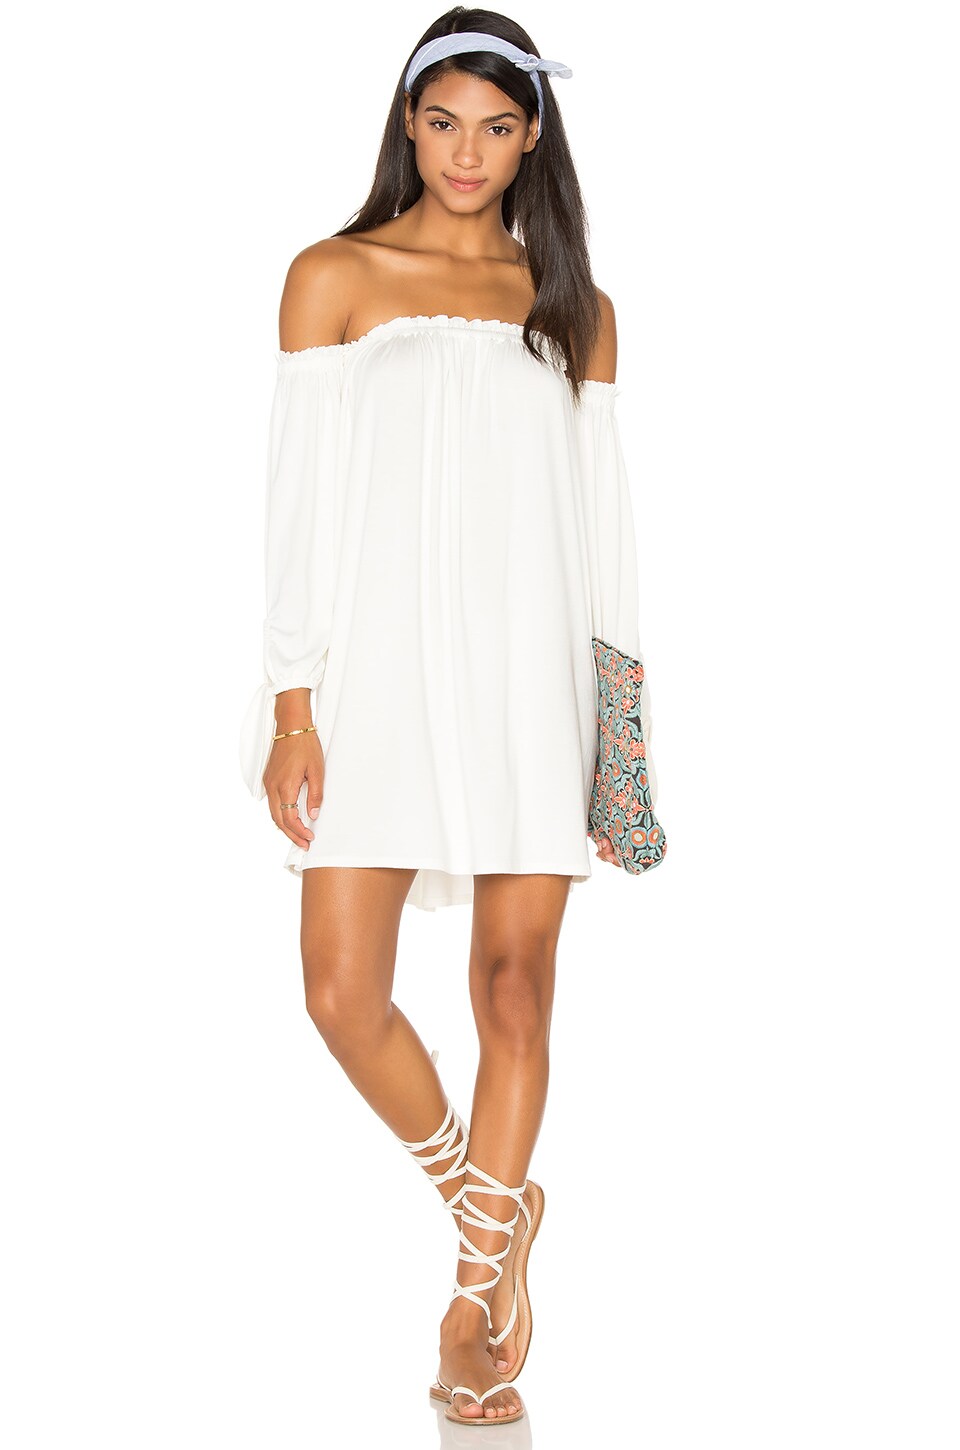 Rachel Pally Trice Mini Dress in White | REVOLVE